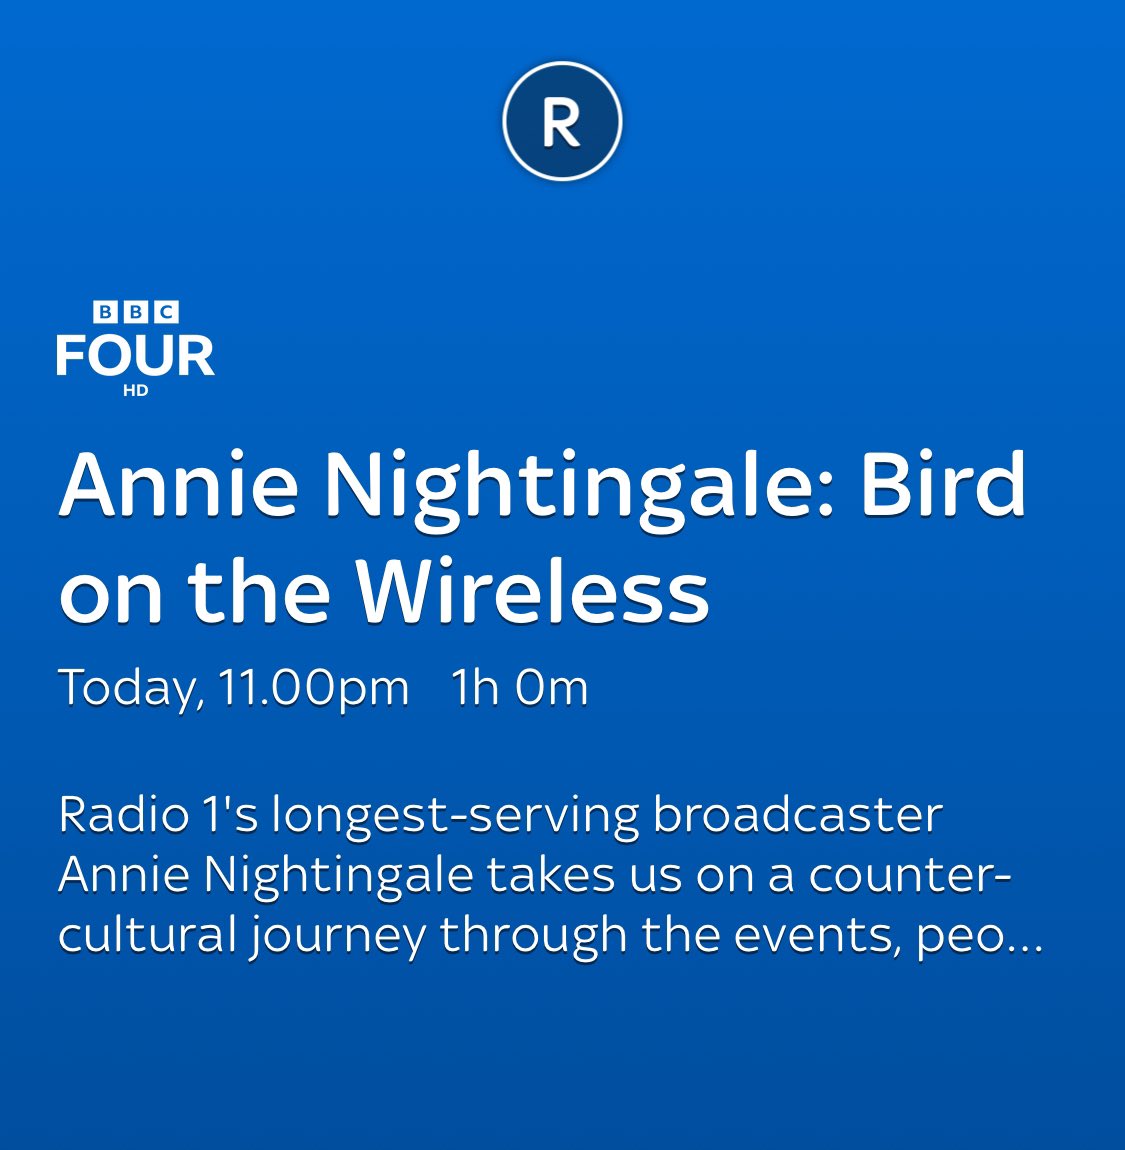 Tonight on BBC Four. #AnnieNightingale